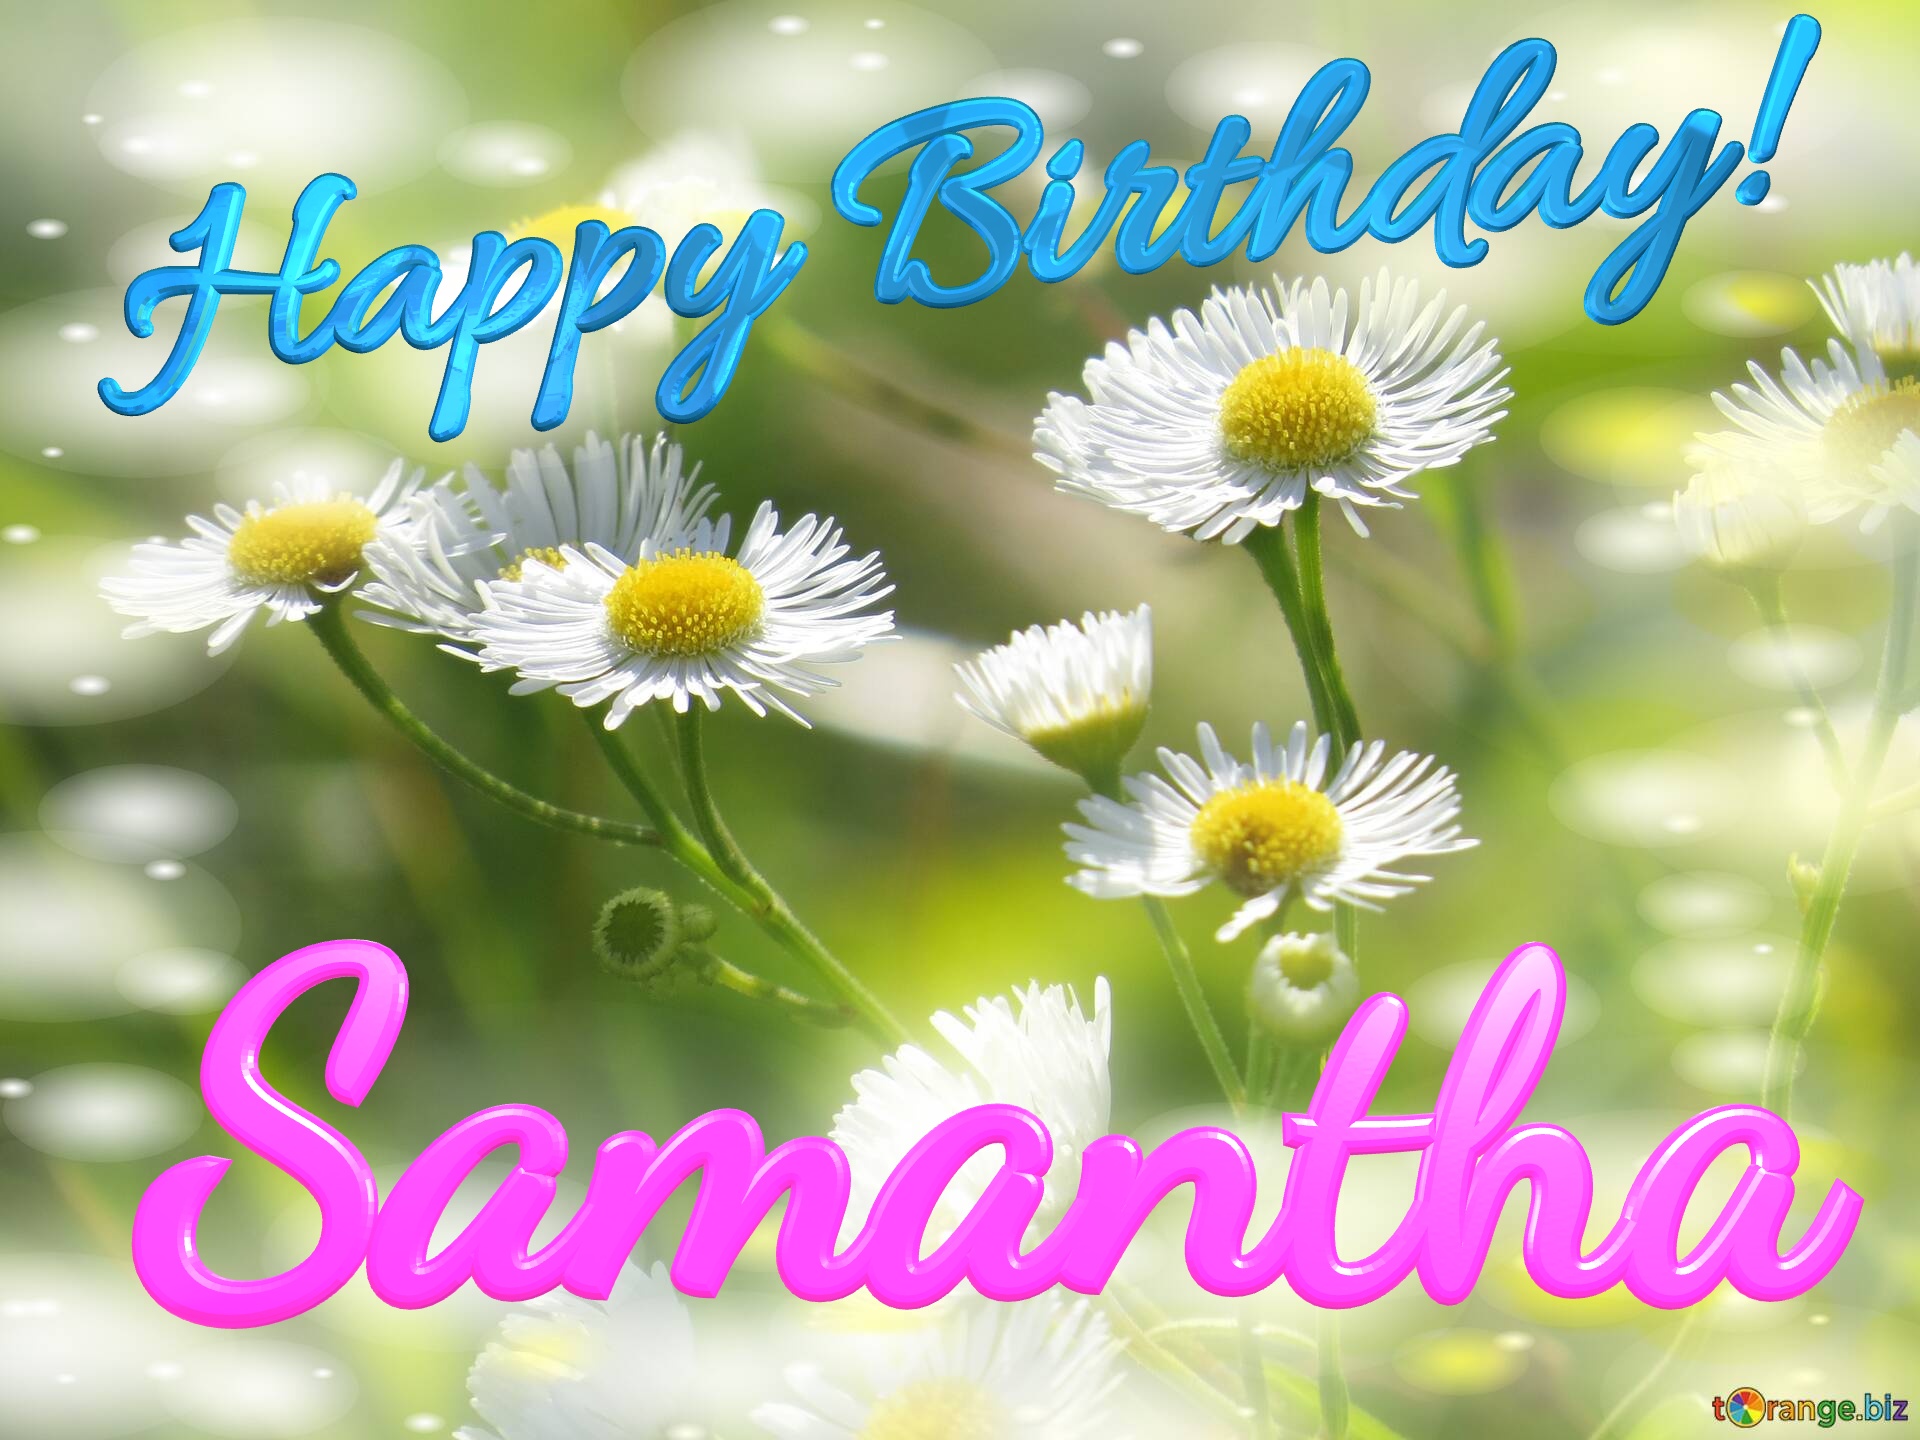 Samantha Happy Birthday! Daisies bokeh background №0